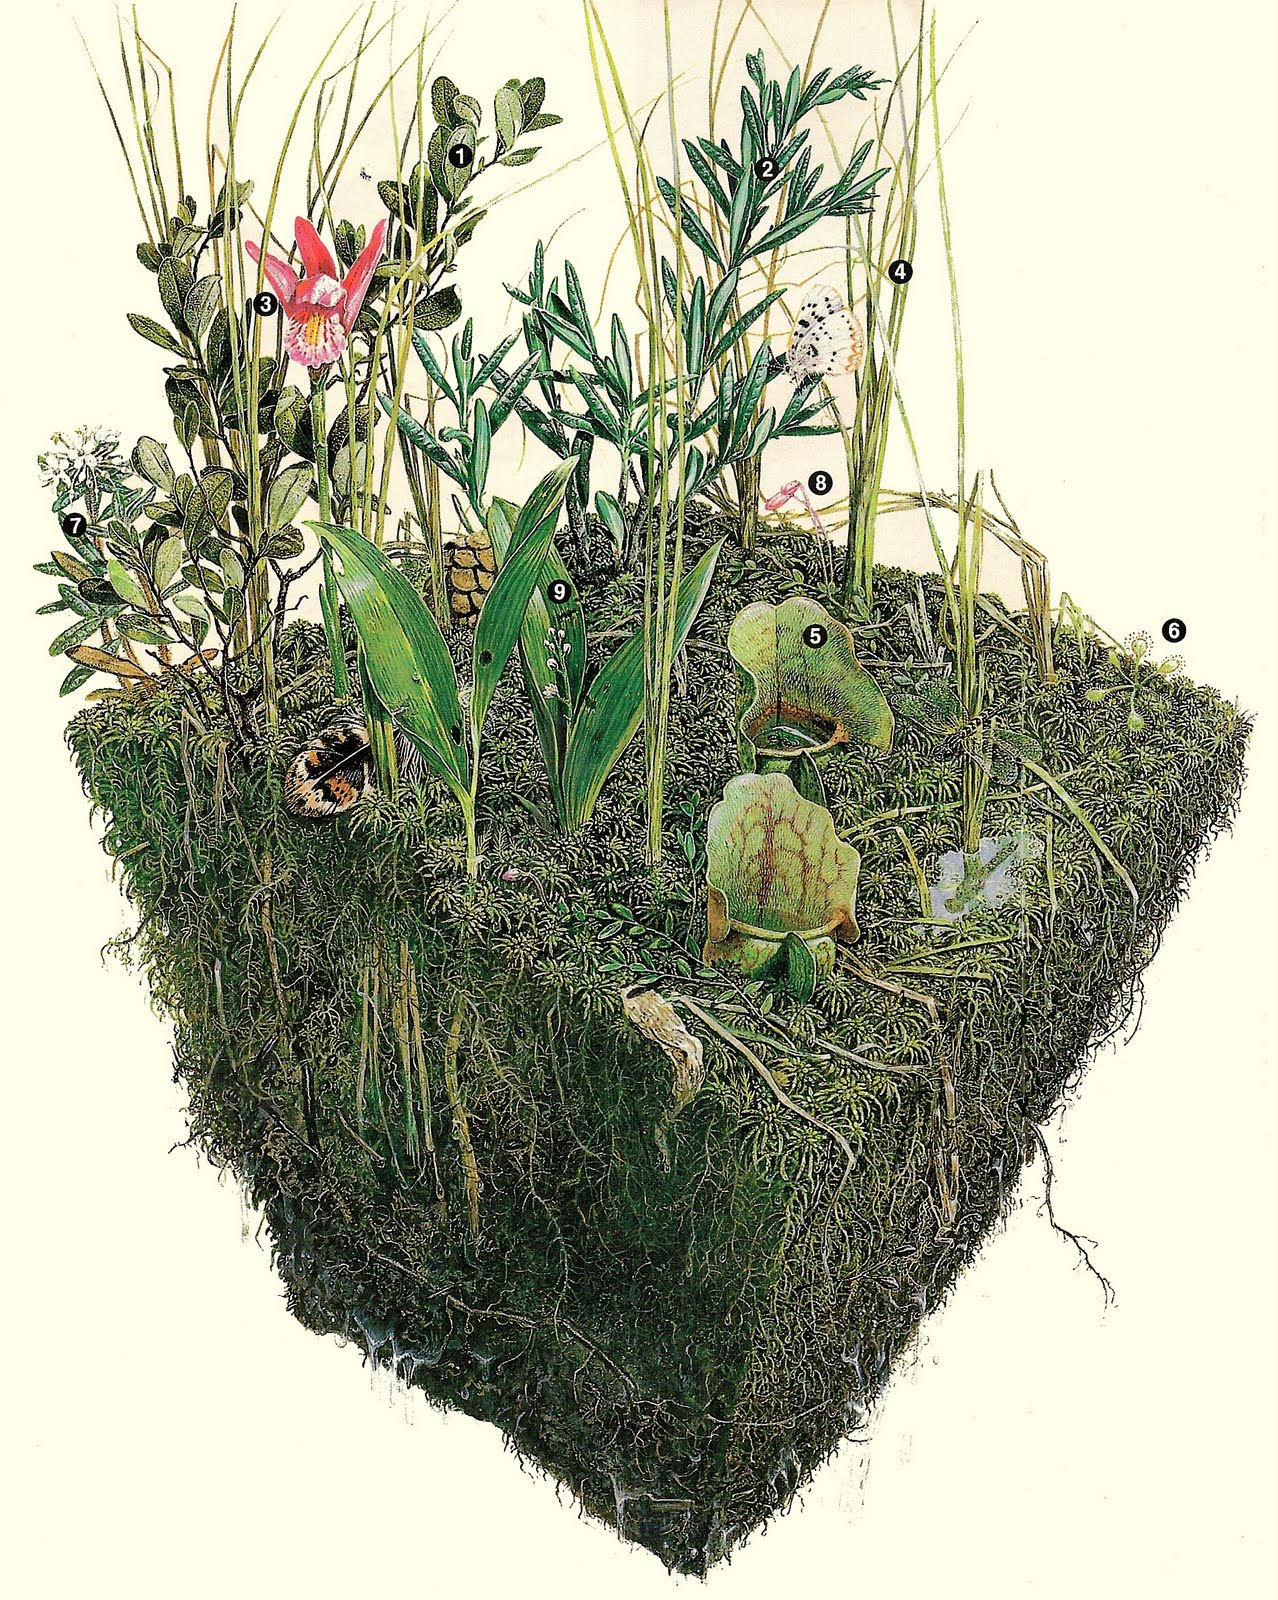 Contain plants. Peat Moss. Криптоботаника. Криптоботаника растения. Adaptive растения.